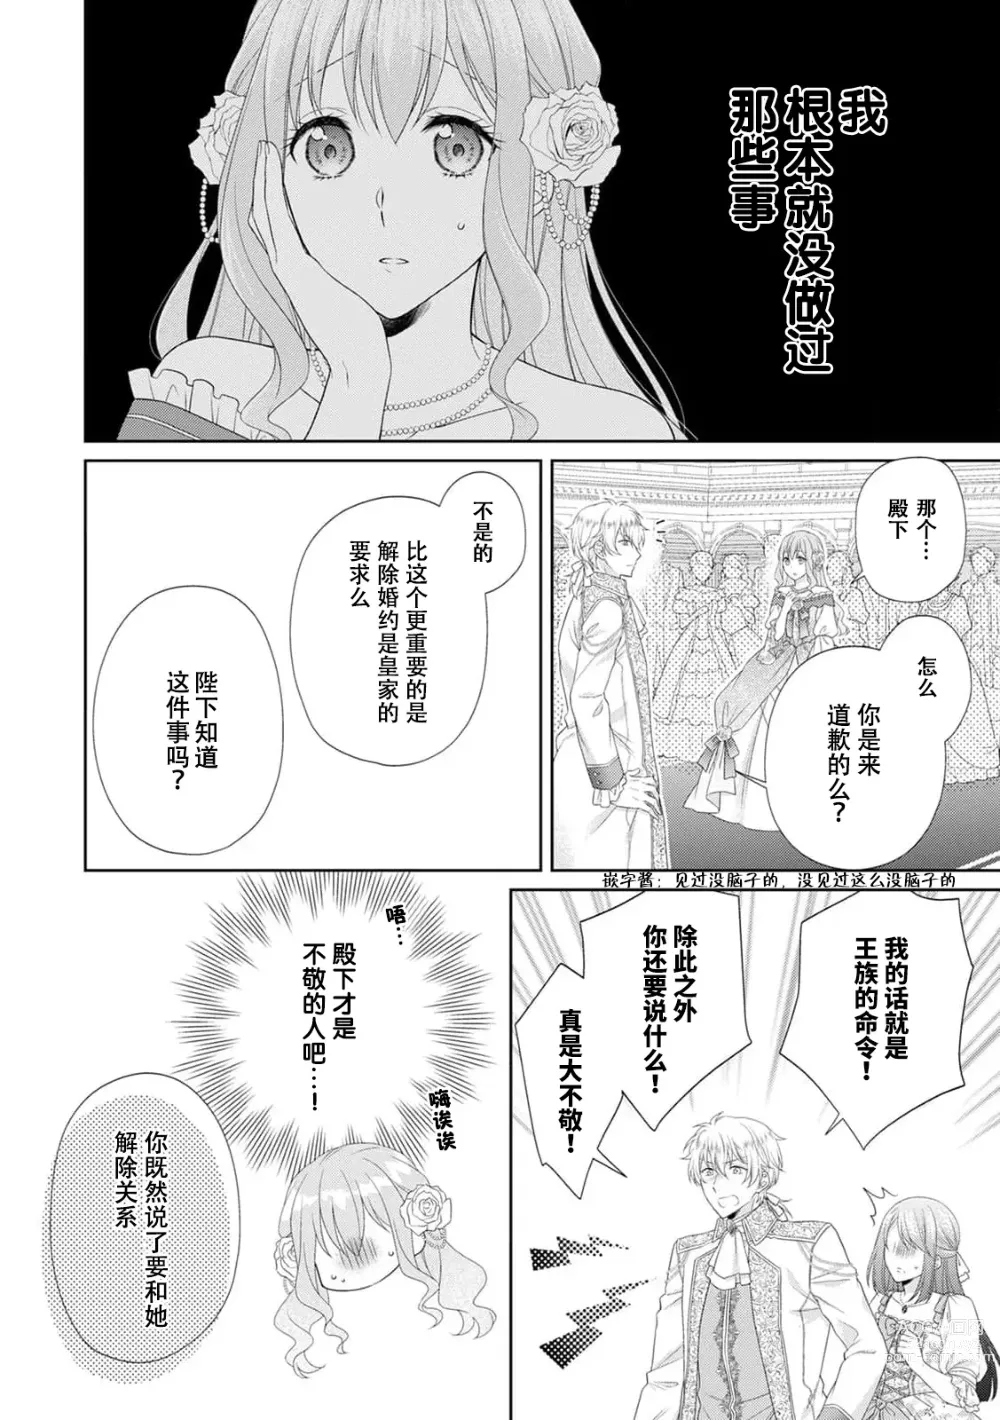 Page 3 of manga 从废除婚约开始运转 与初恋快乐的H…！